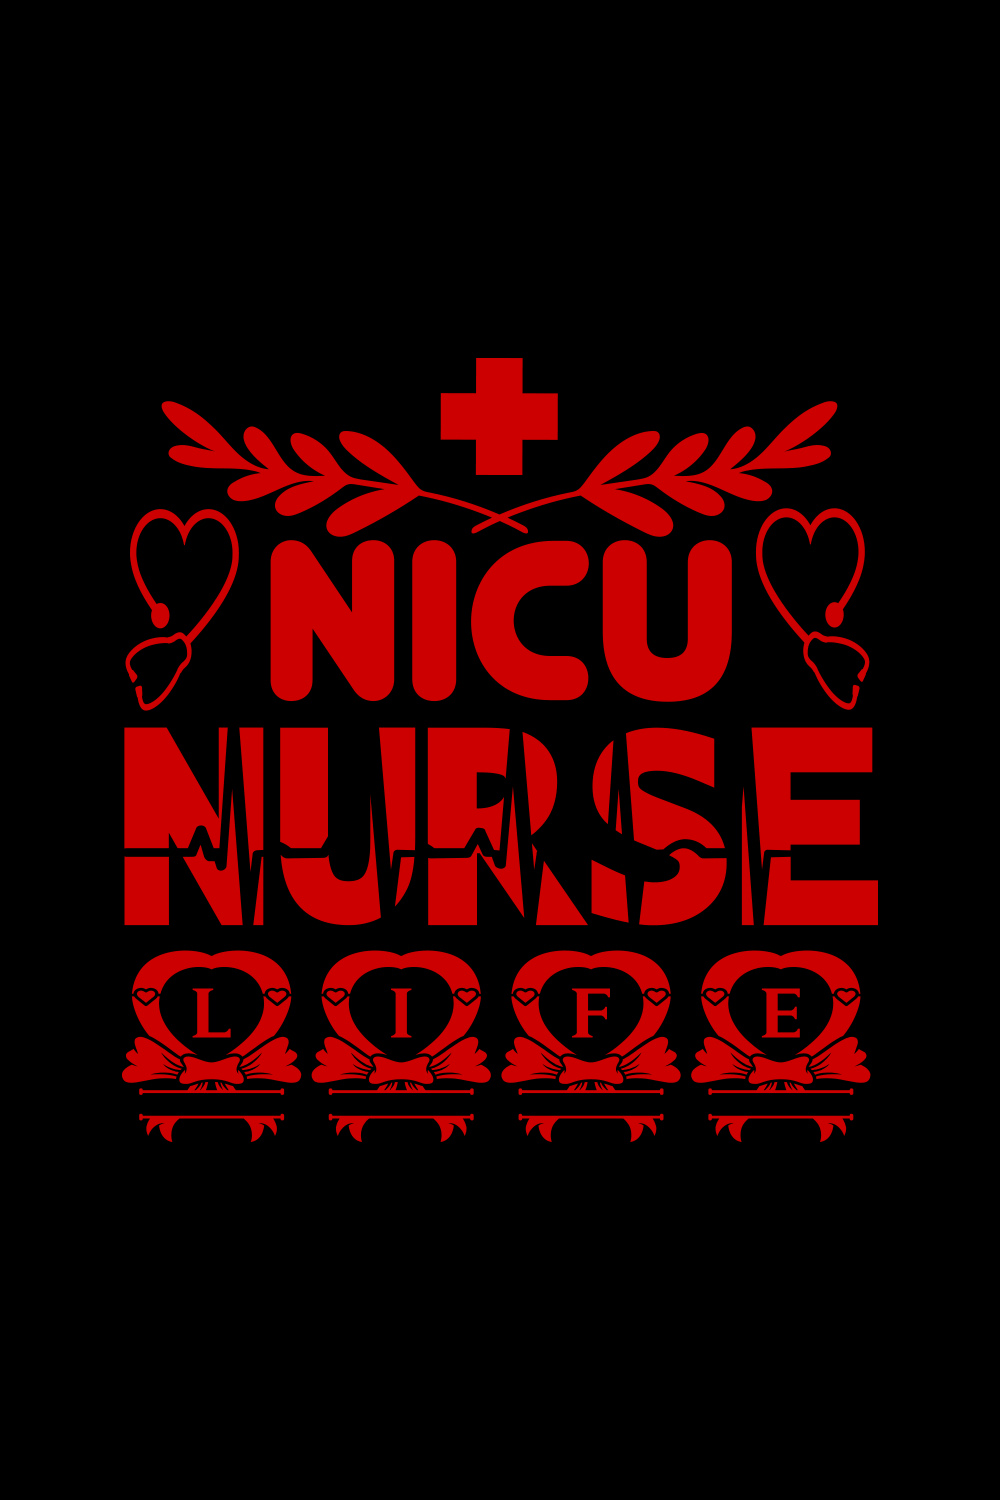 NICU Nurse Life T-shirt design pinterest preview image.